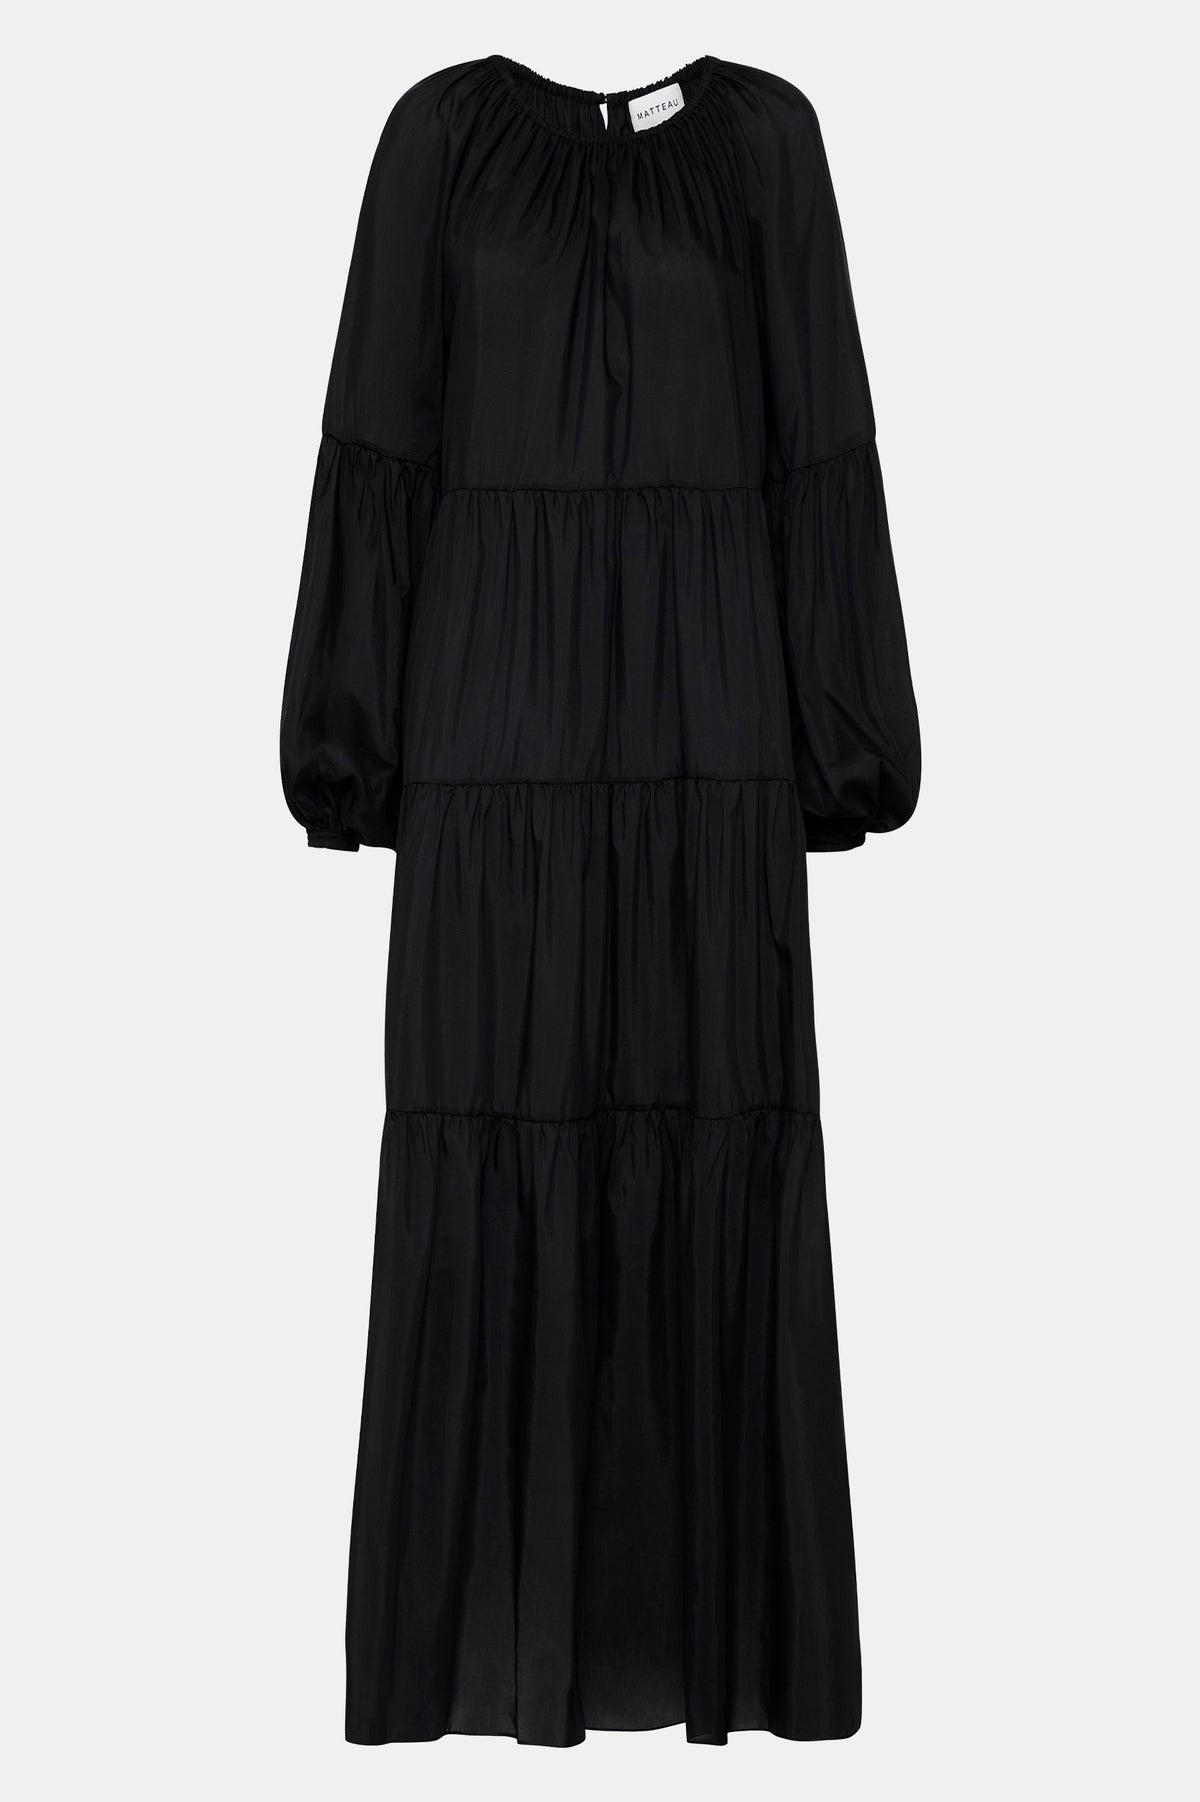 Voluminous Tiered Dress in Black